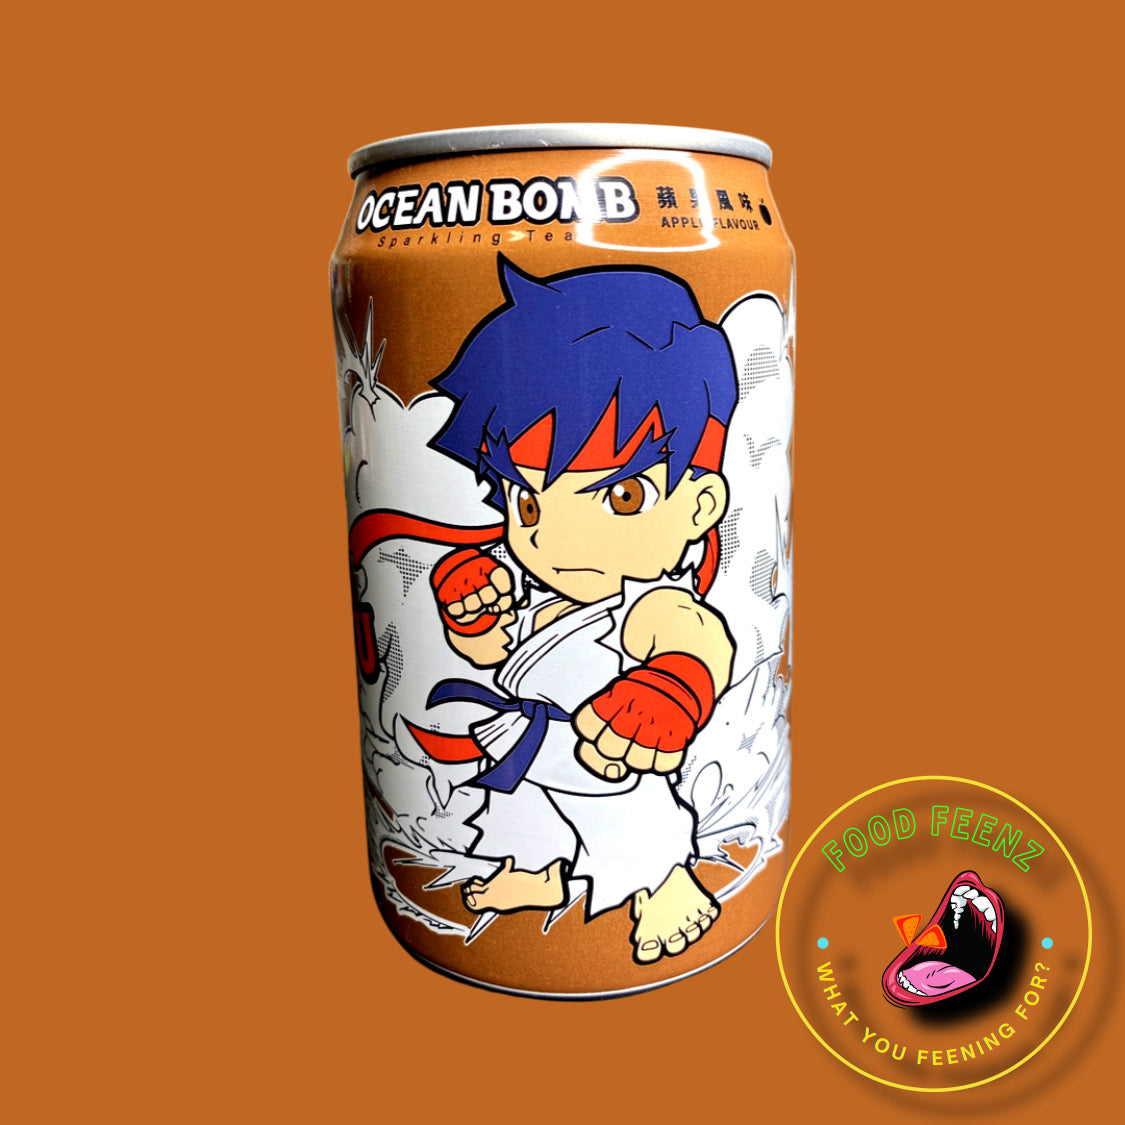 Street Fighter Ocean Bomb Ryu Apple Tea Flavor (Taiwan)